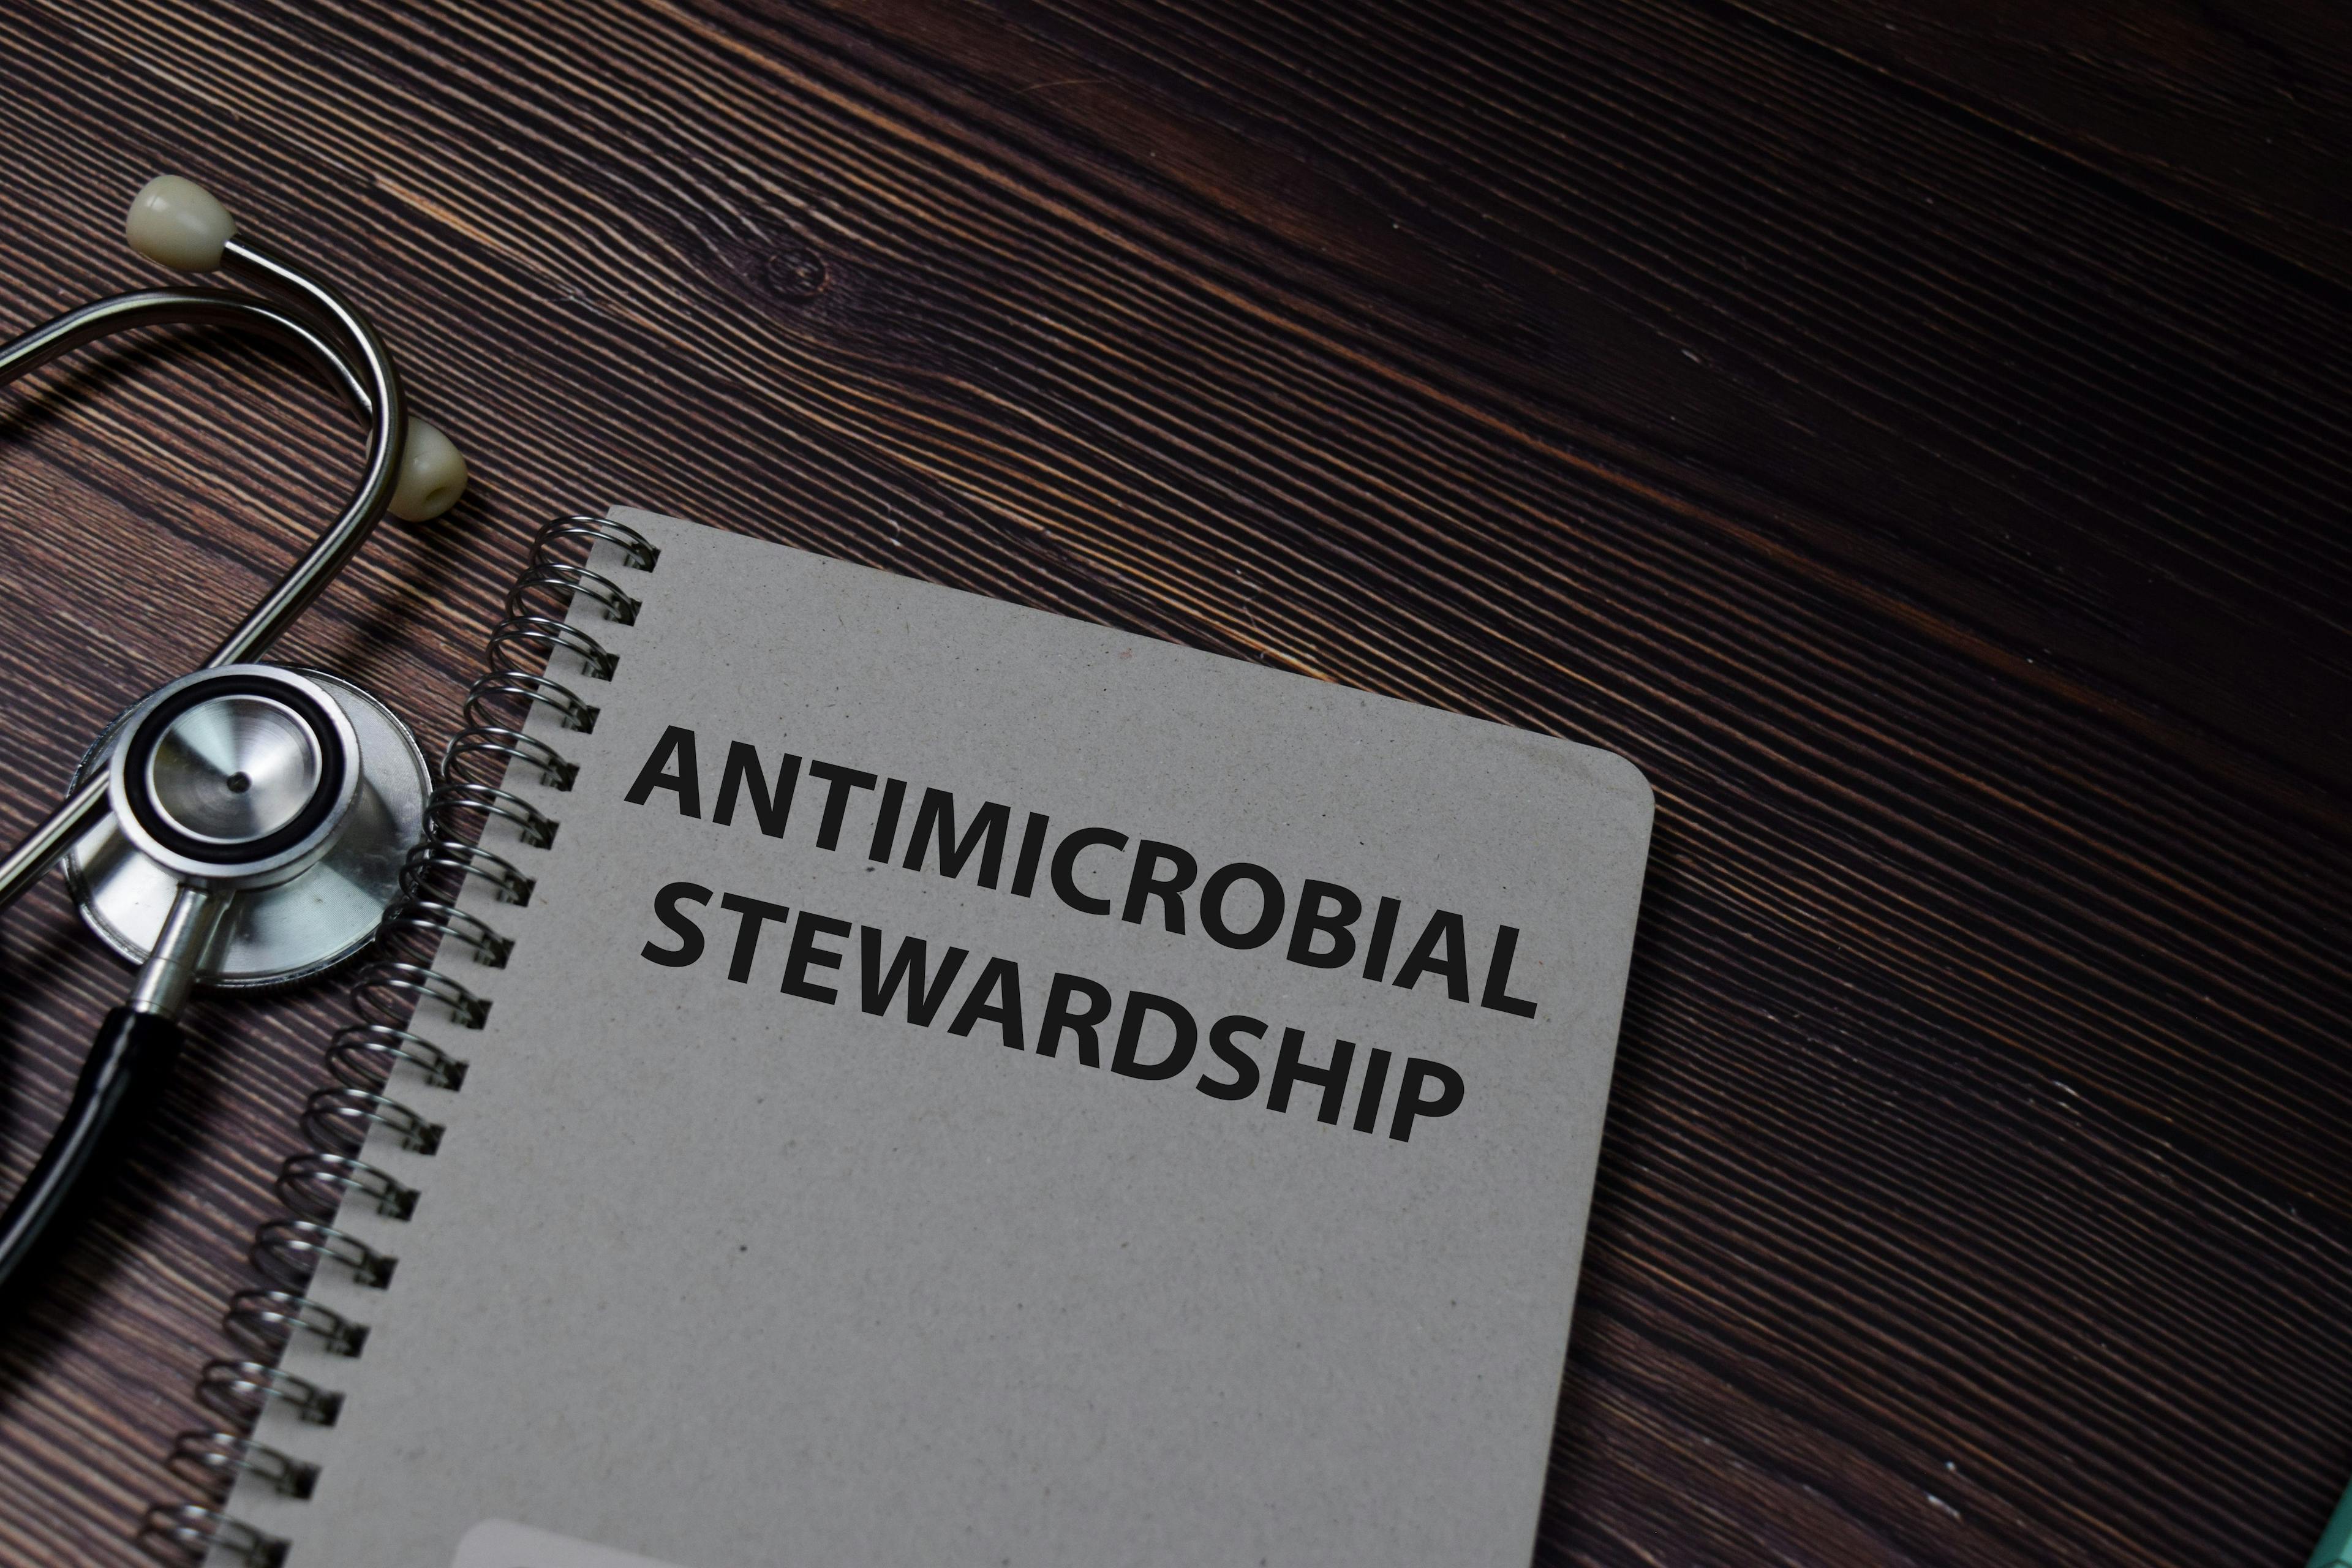 Engaging in Antimicrobial Stewardship Reduces Antibiotic Usage